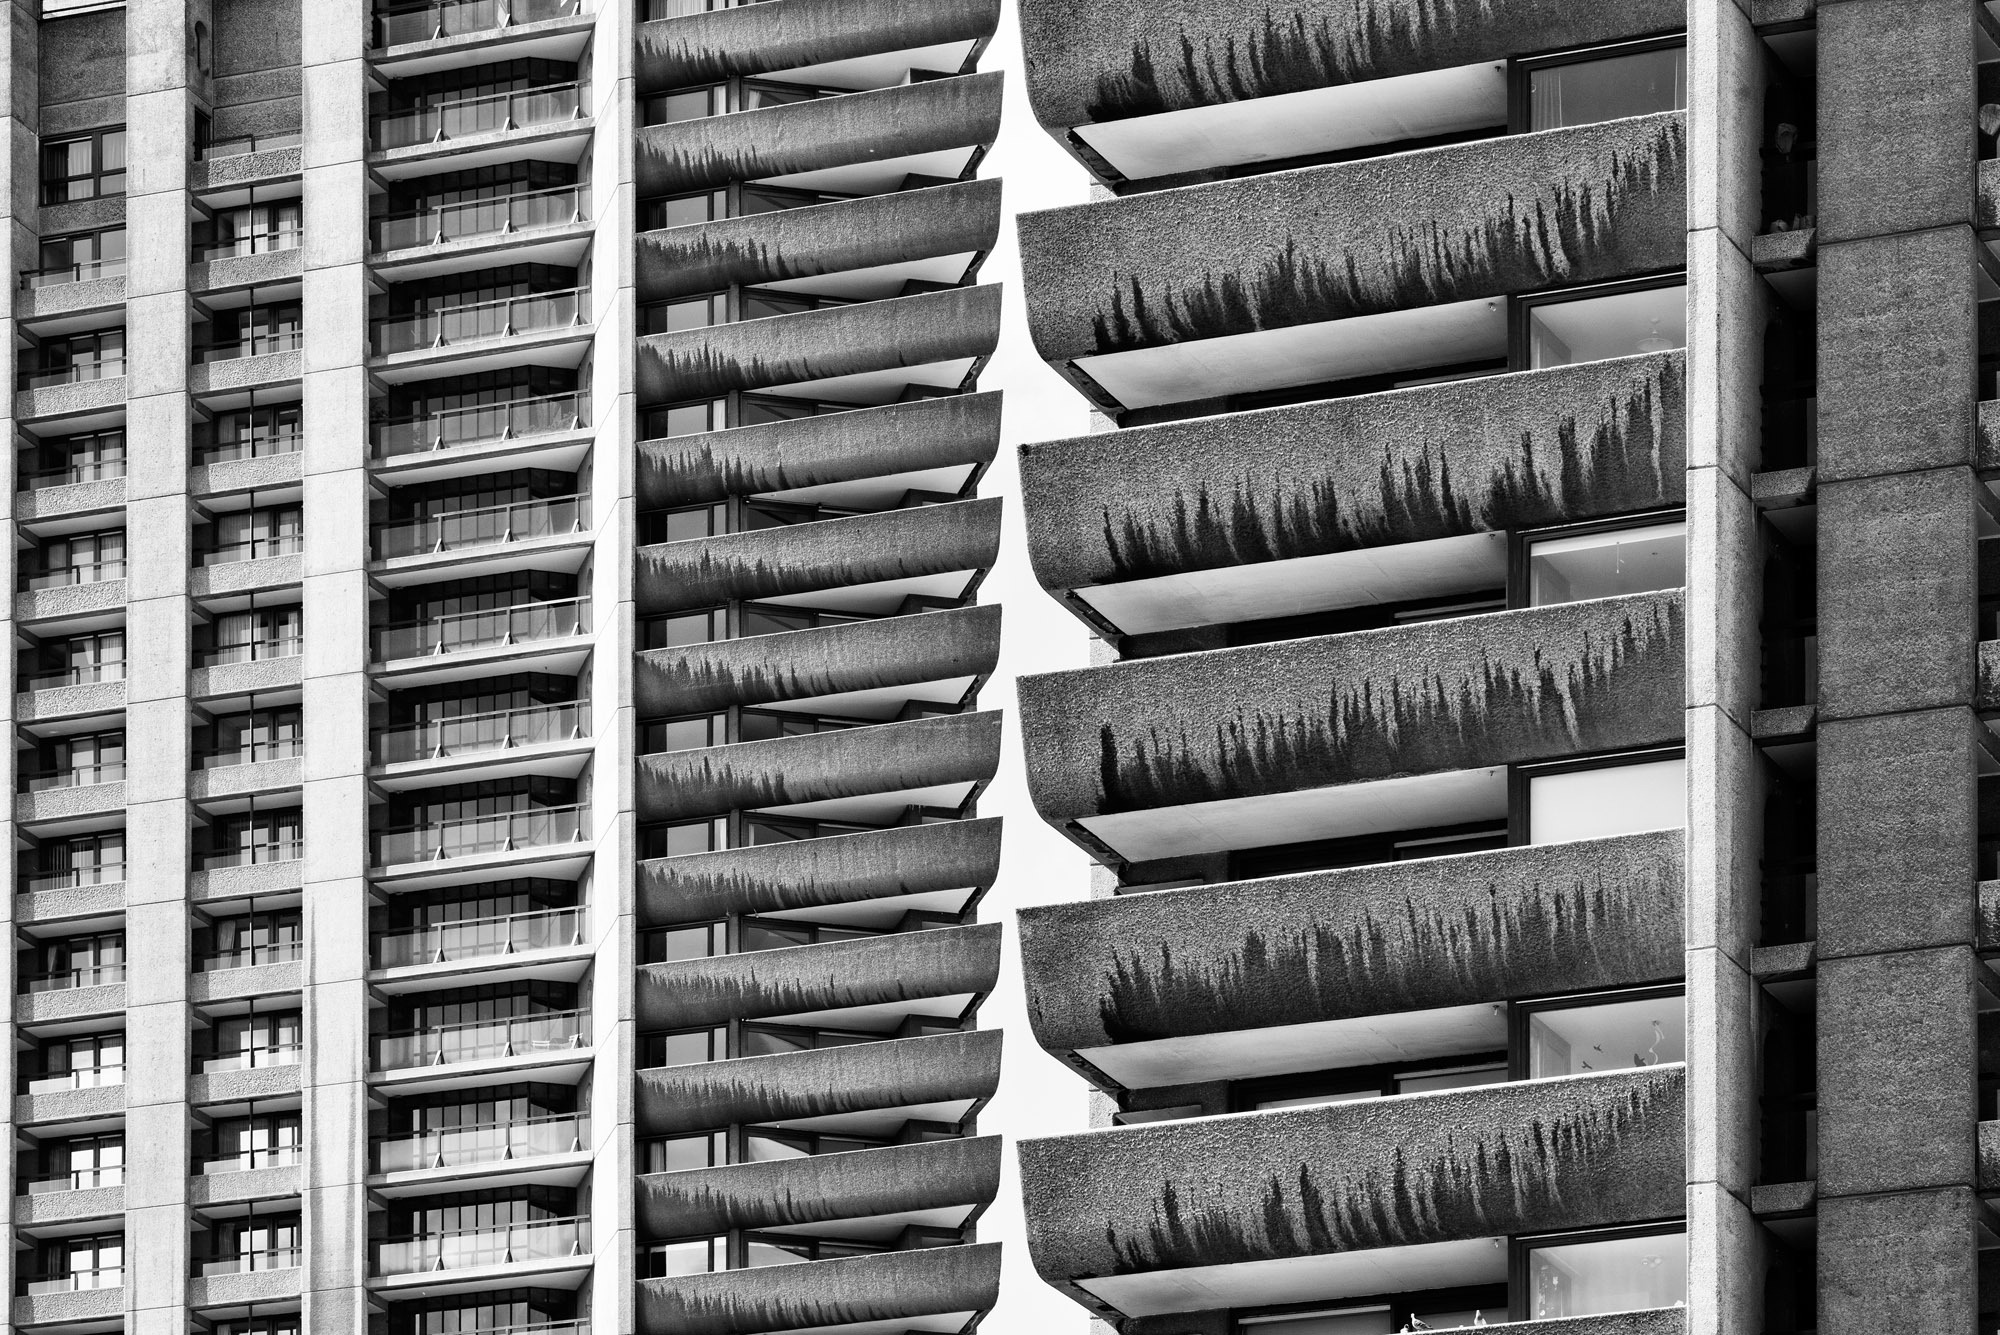 General 2000x1335 architecture building block of flats Brutalism Barbican London UK monochrome balcony lines concrete window